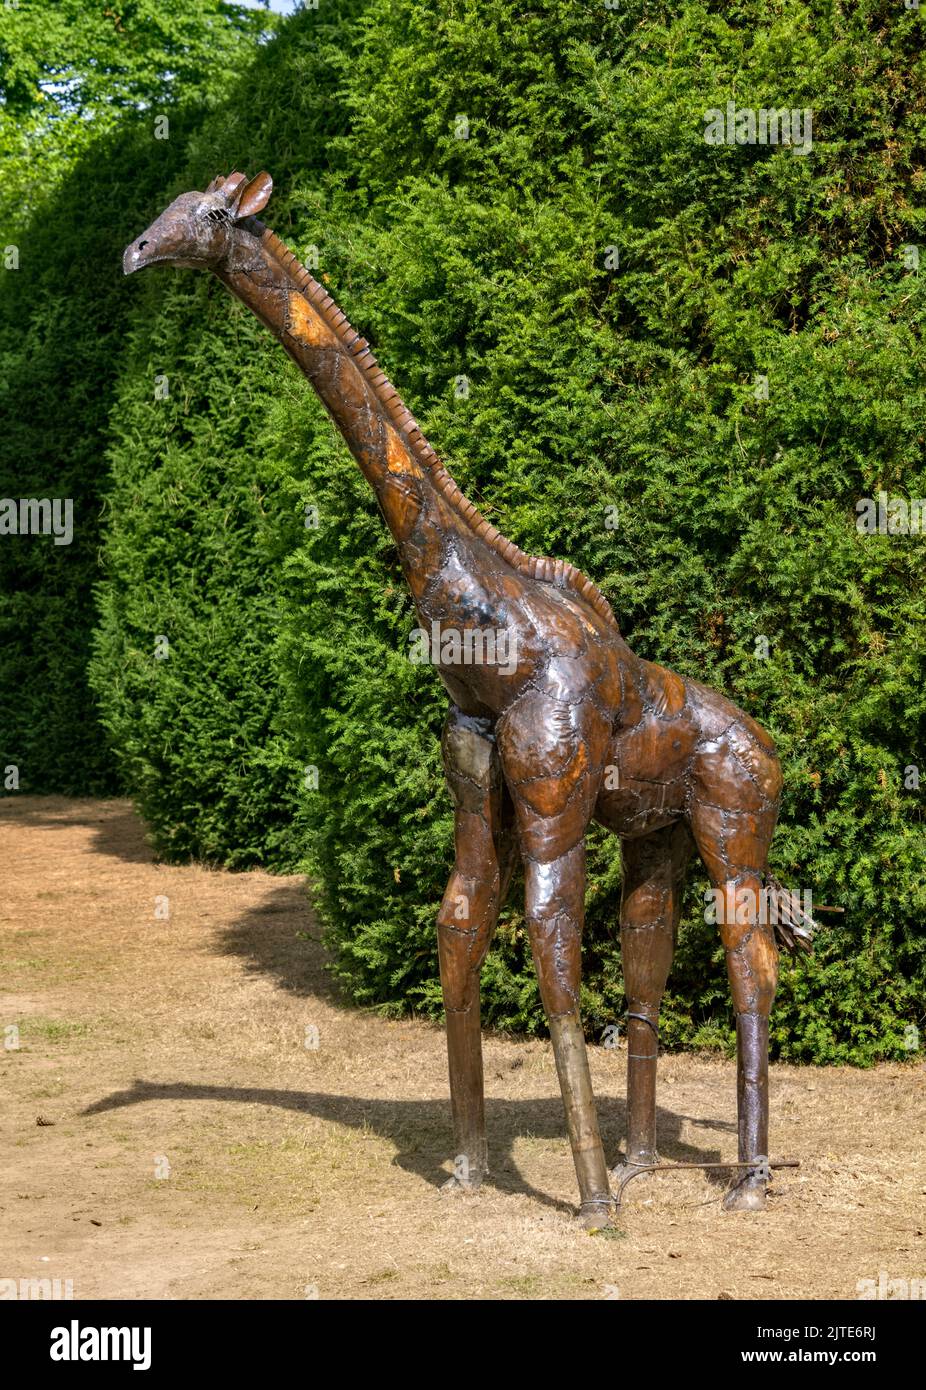 Metal Giraffe Sculpture Knebworth House and Gardens Banque D'Images